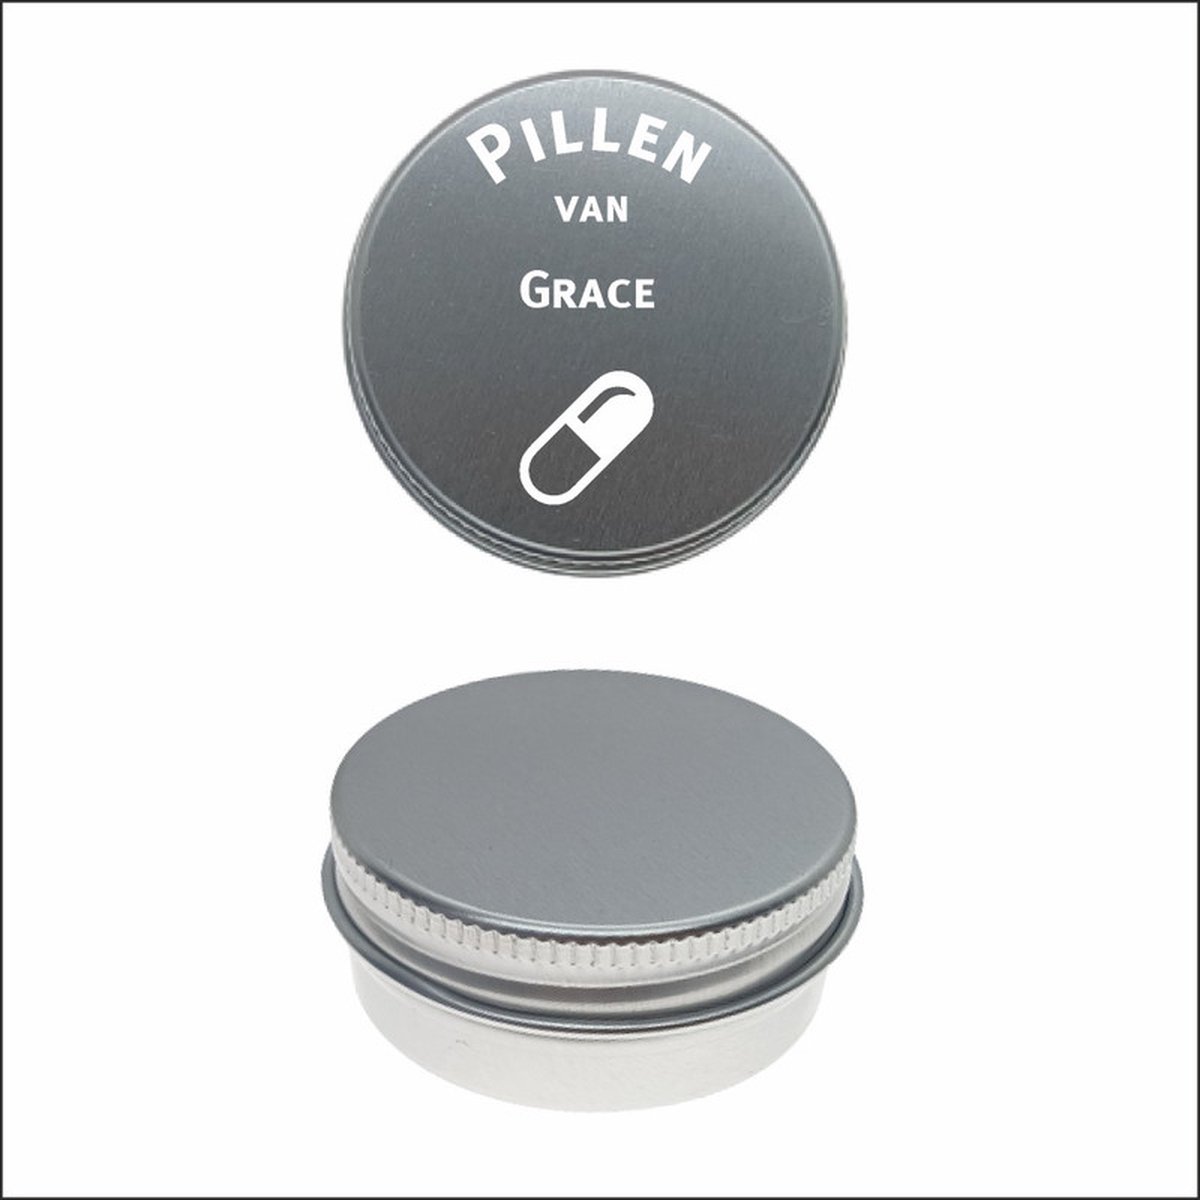 Pillen Blikje Met Naam Gravering - Grace